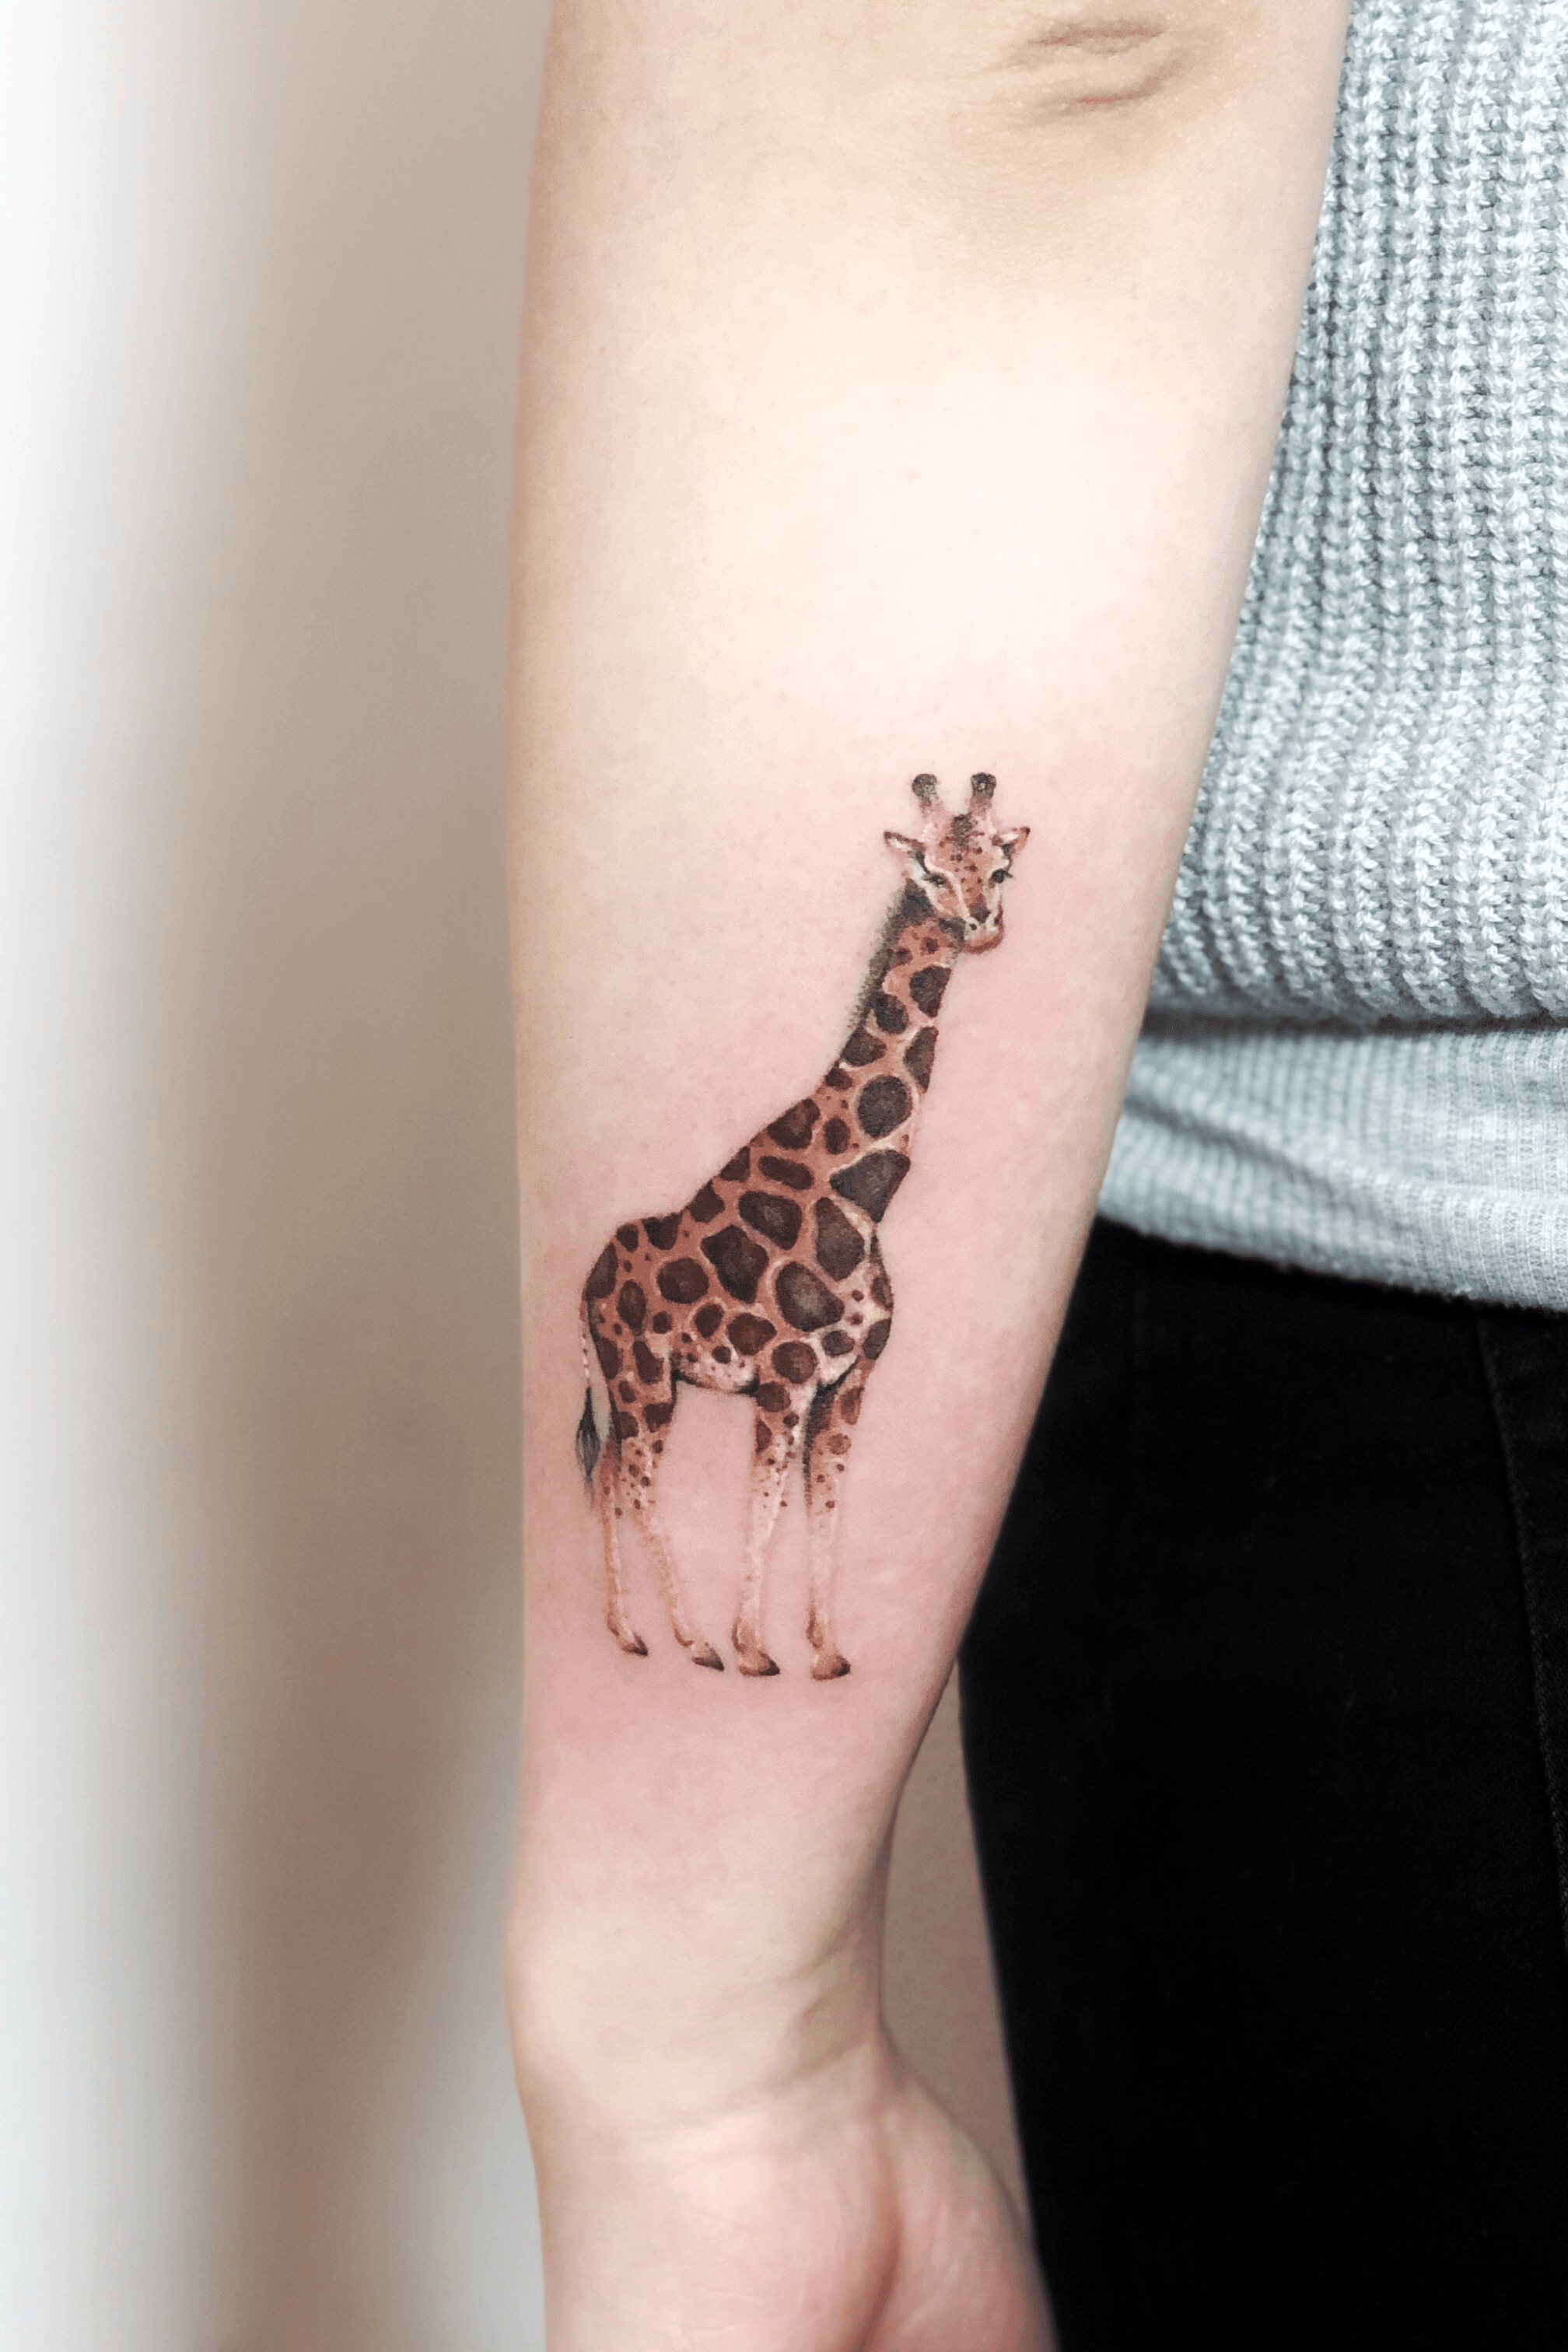 13 Best Small giraffe tattoo ideas  giraffe tattoos giraffe small giraffe  tattoo